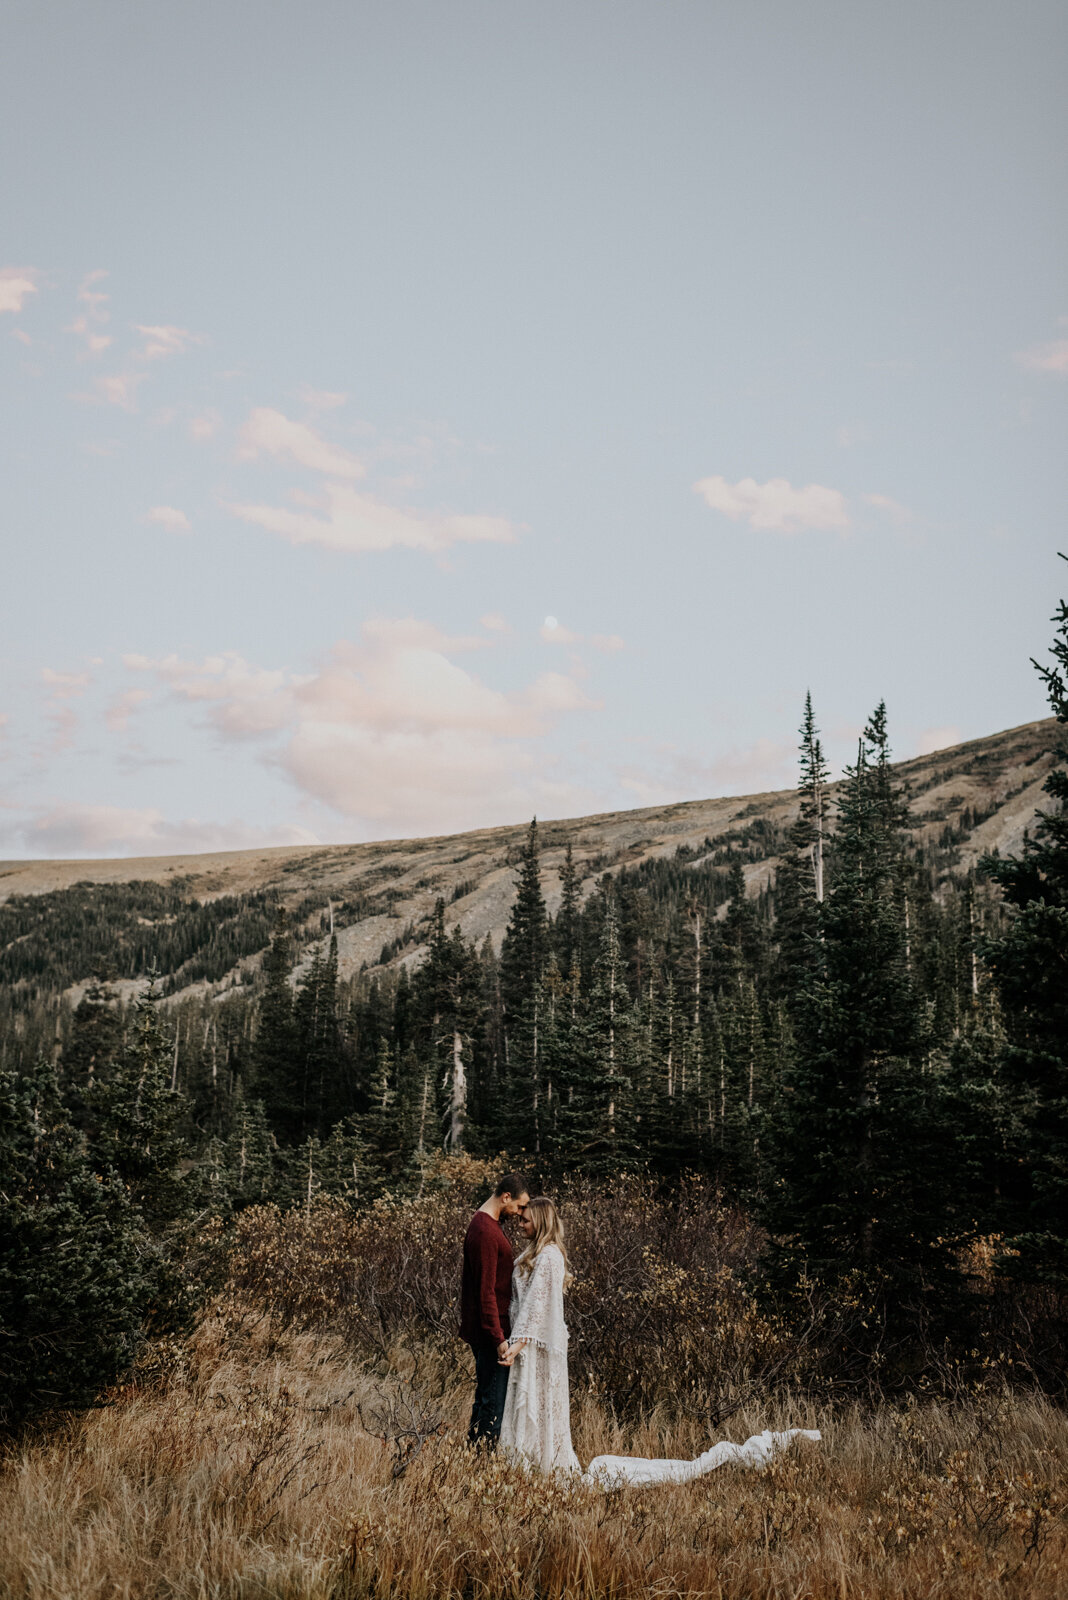 Indian Peaks Wilderness Area Wedding Photographer